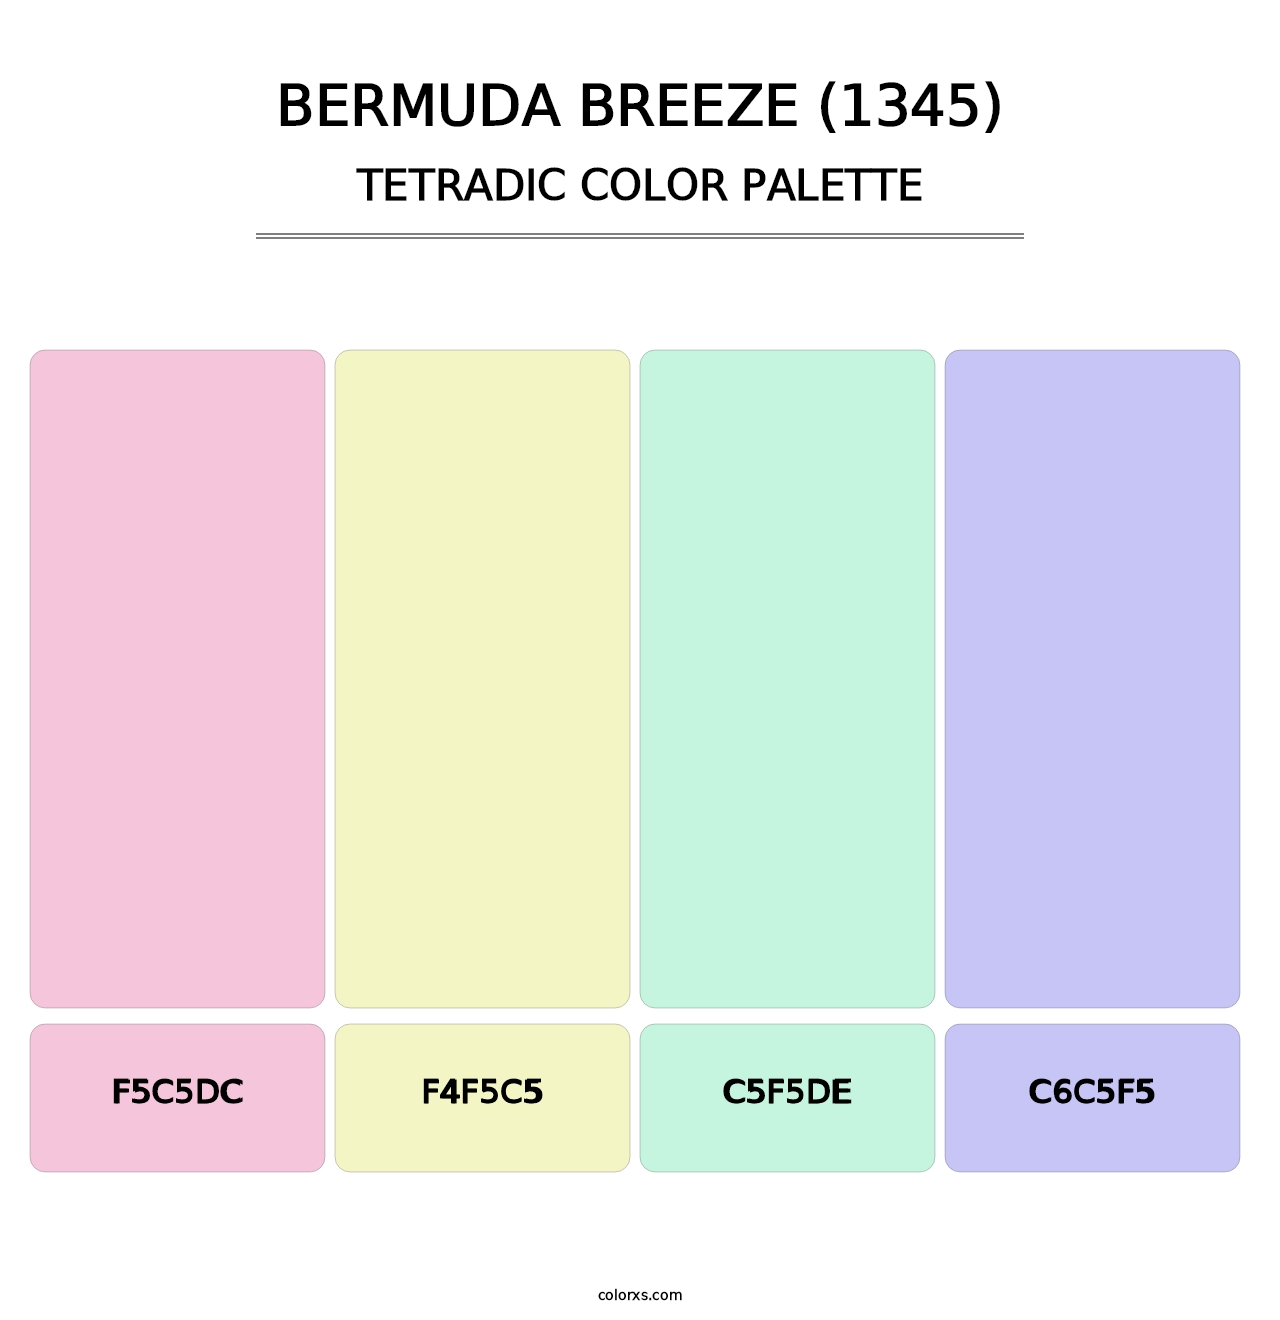 Bermuda Breeze (1345) - Tetradic Color Palette